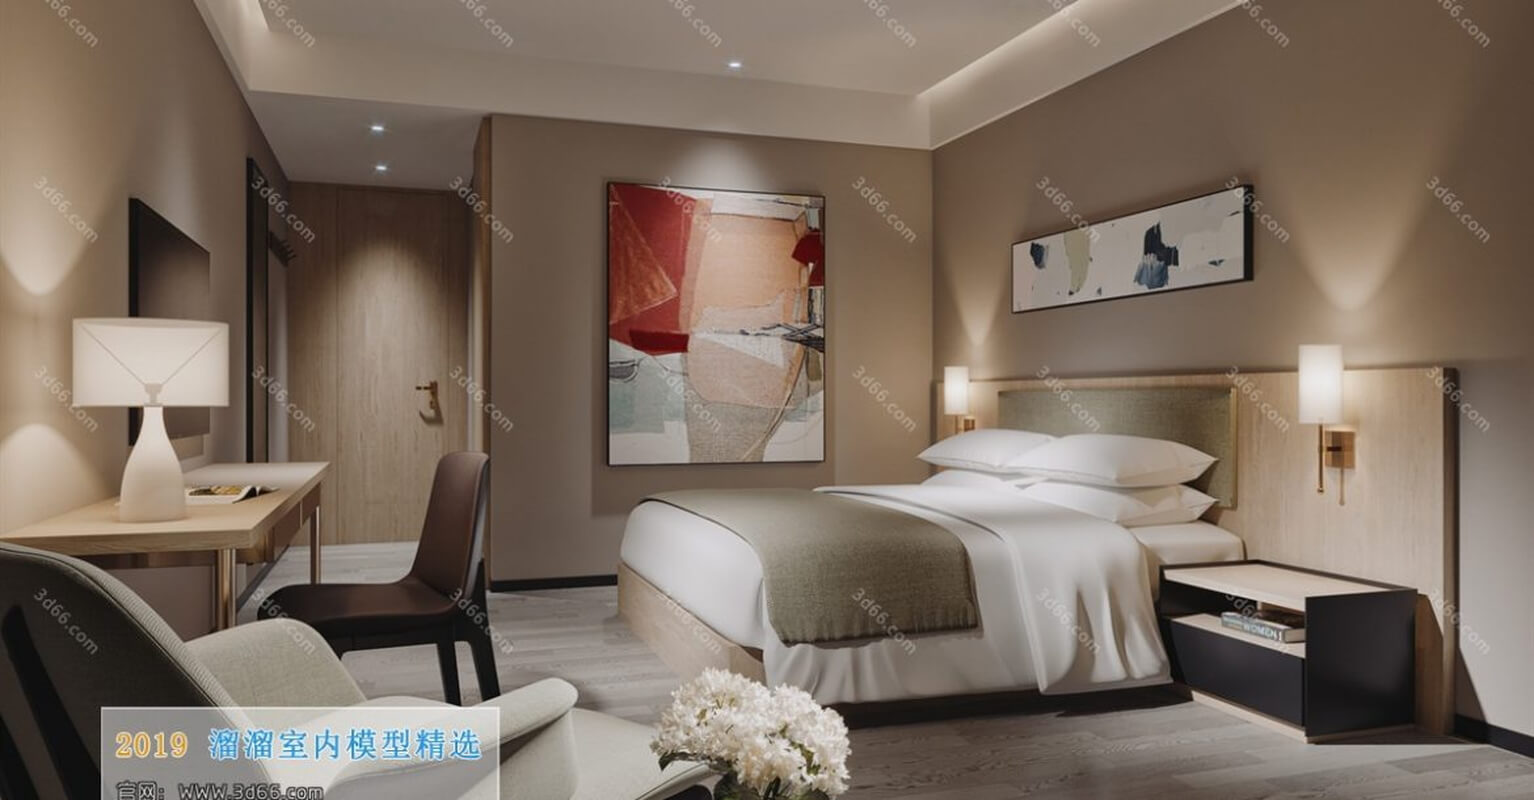 3D66 Hotel Suite Interior 2019 Style (04)